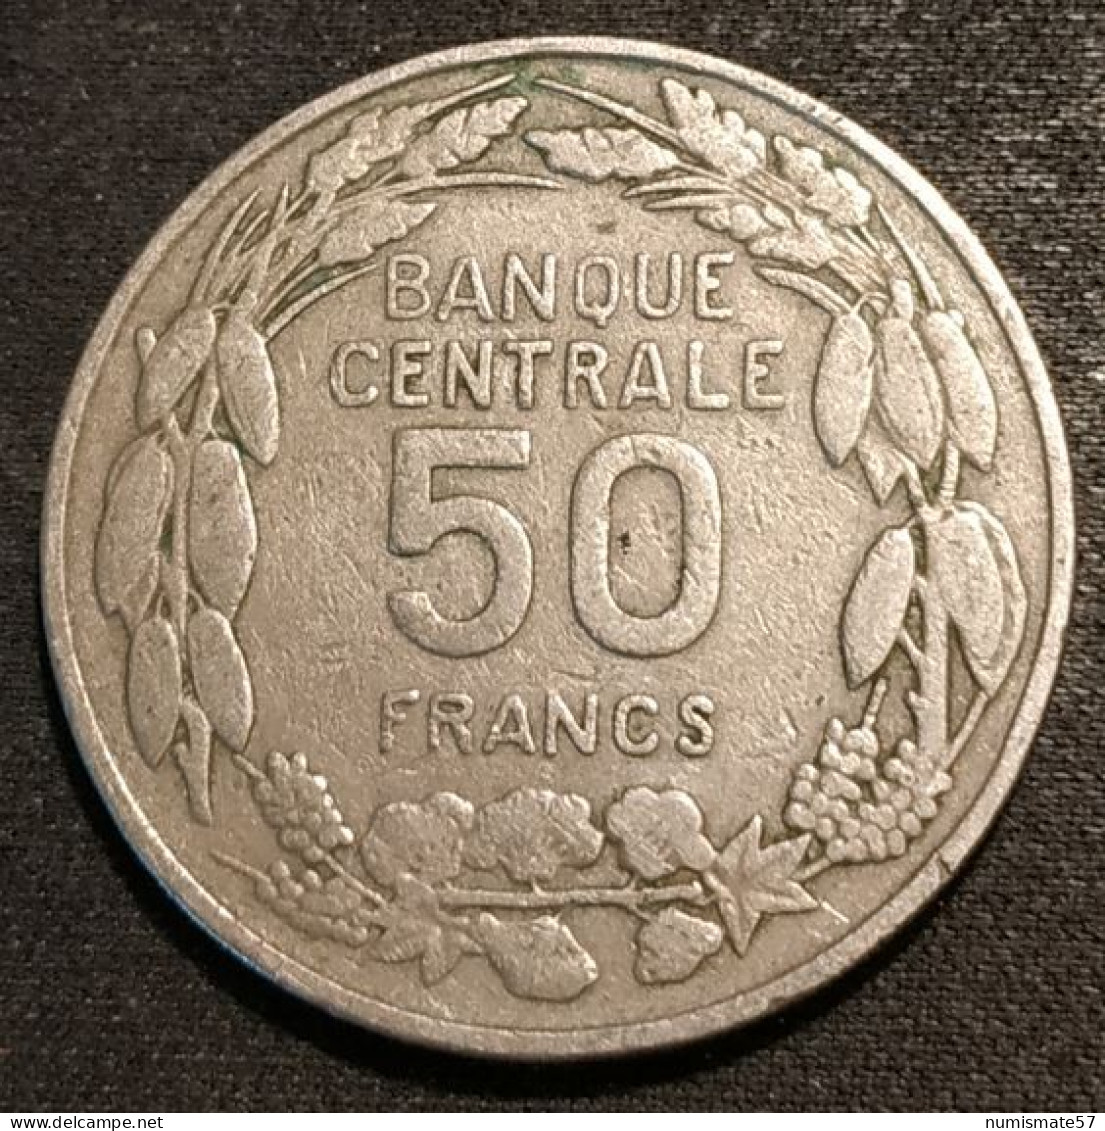 CAMEROUN - 50 FRANCS 1960 - KM 13 - ( 1er JANVIER 1960 - PAIX TRAVAIL PATRIE ) - Kamerun